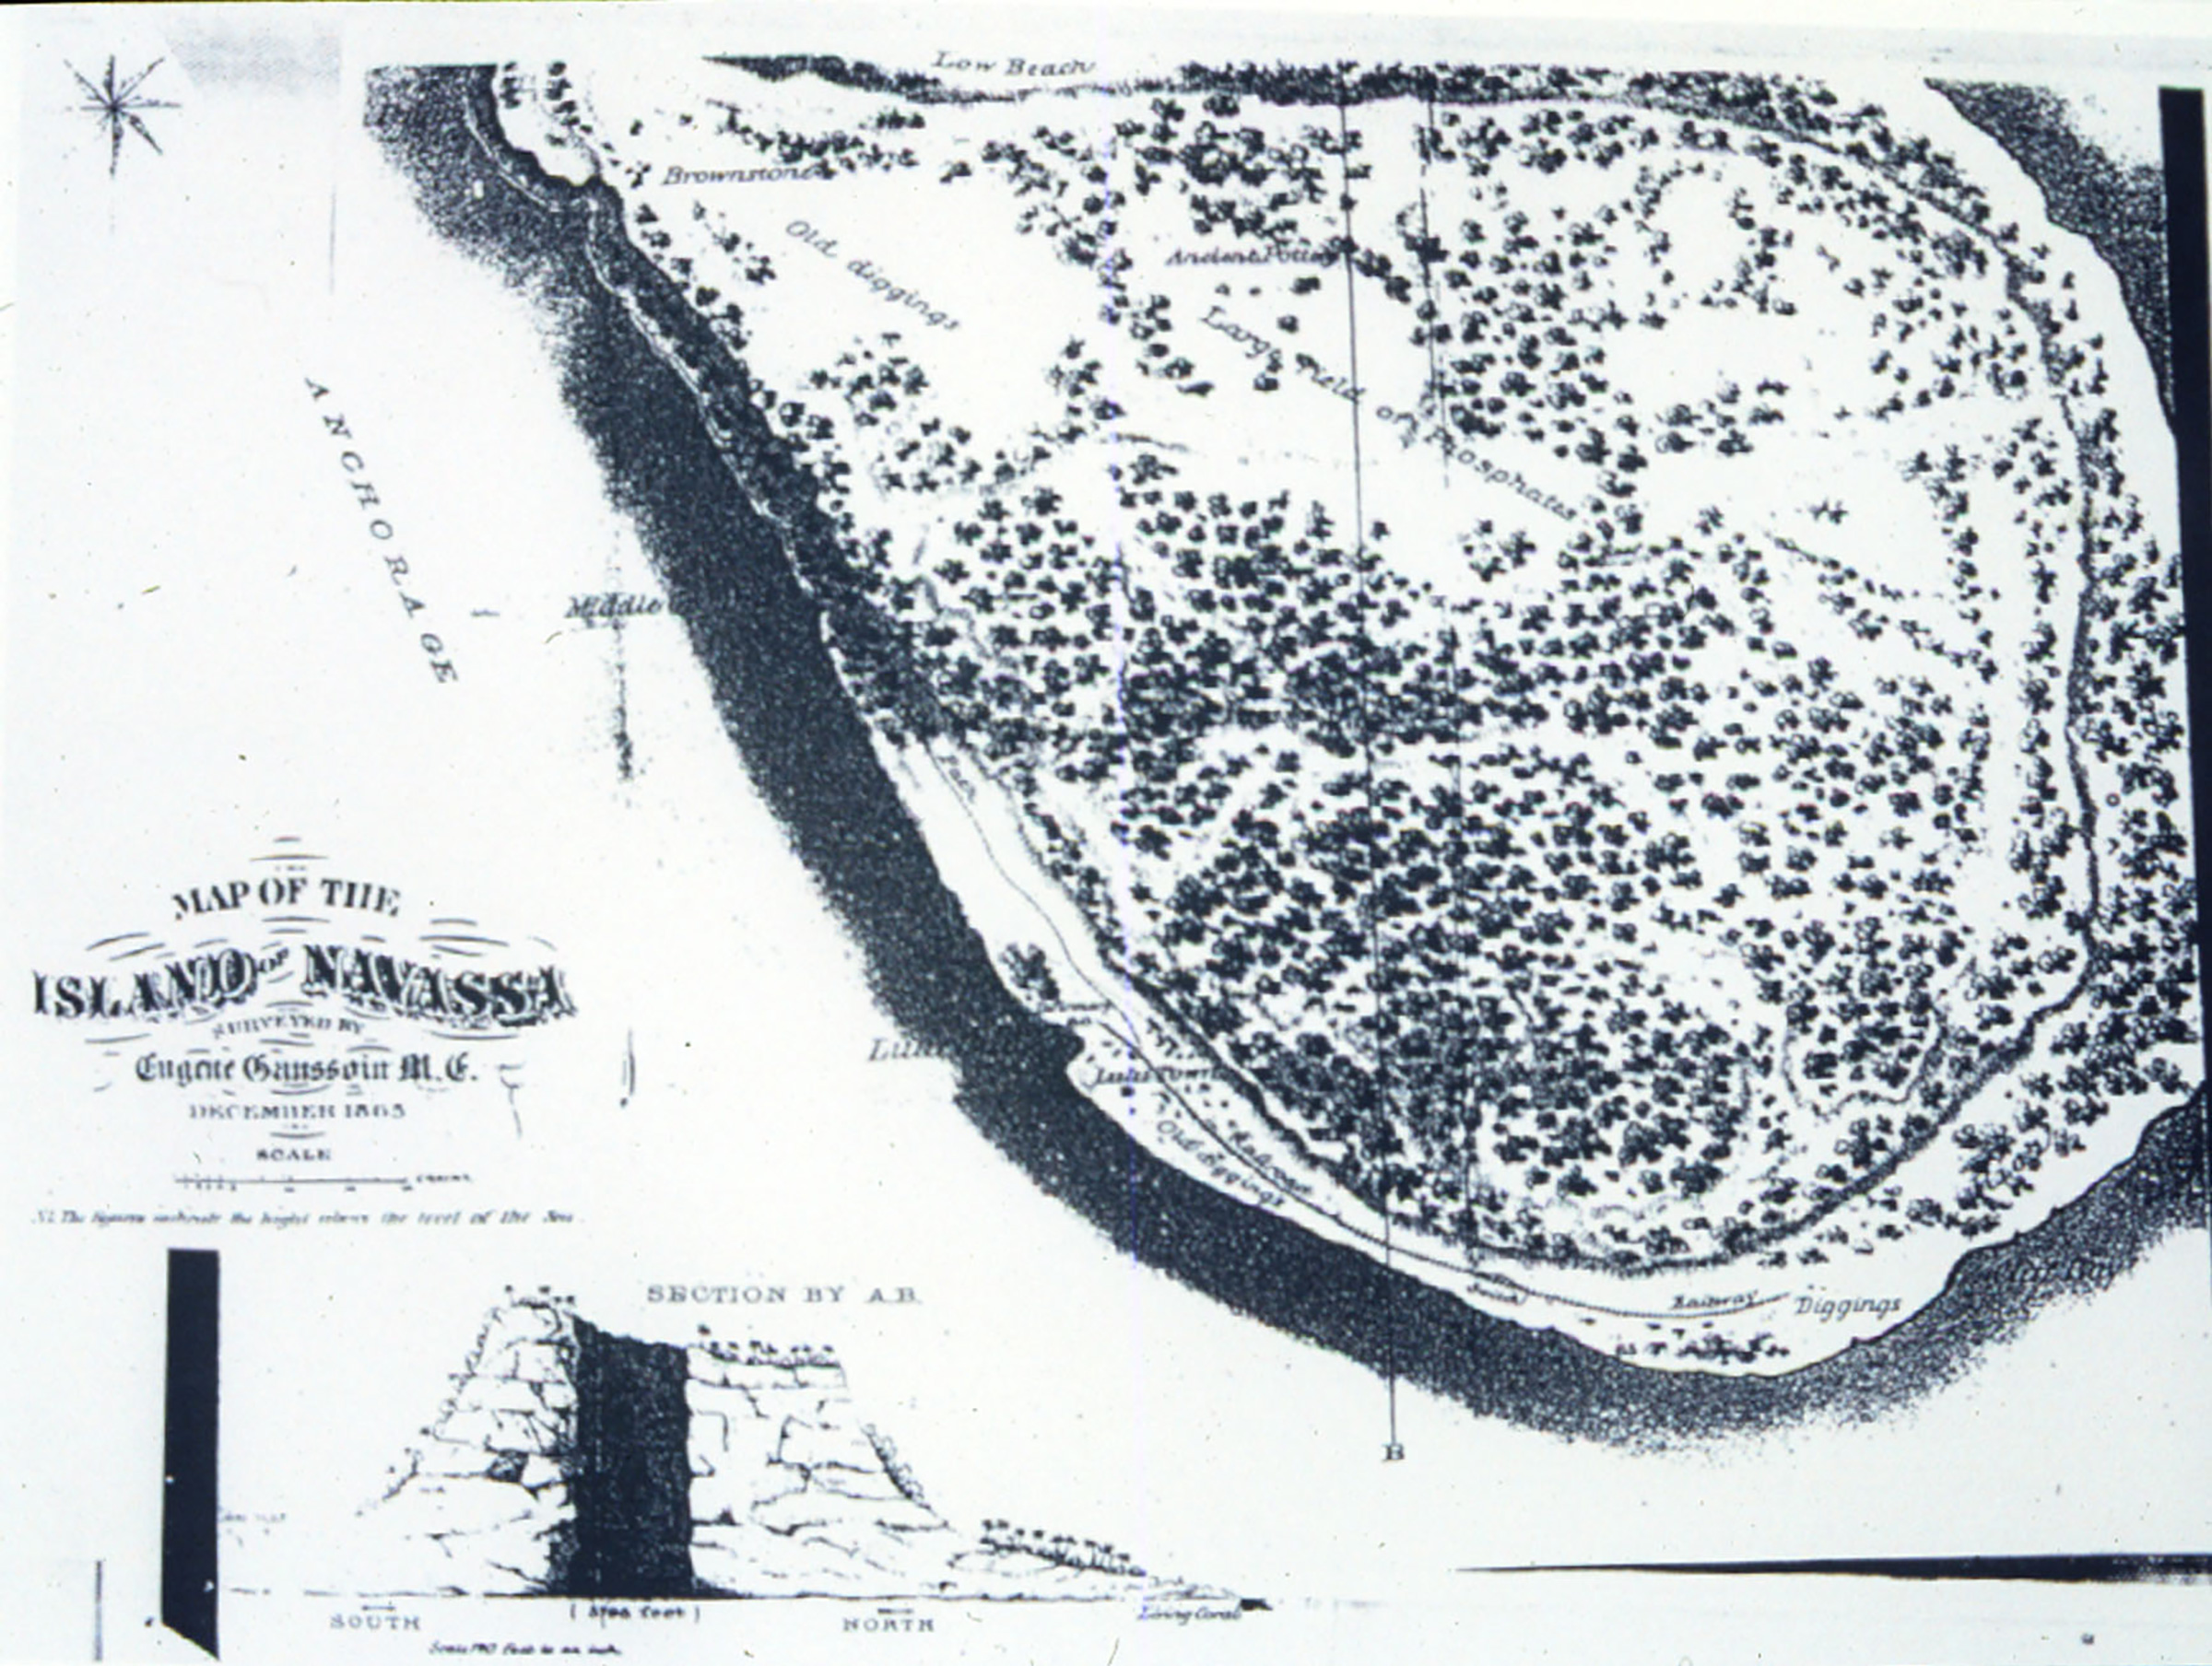 Historic map of the island of Navassa